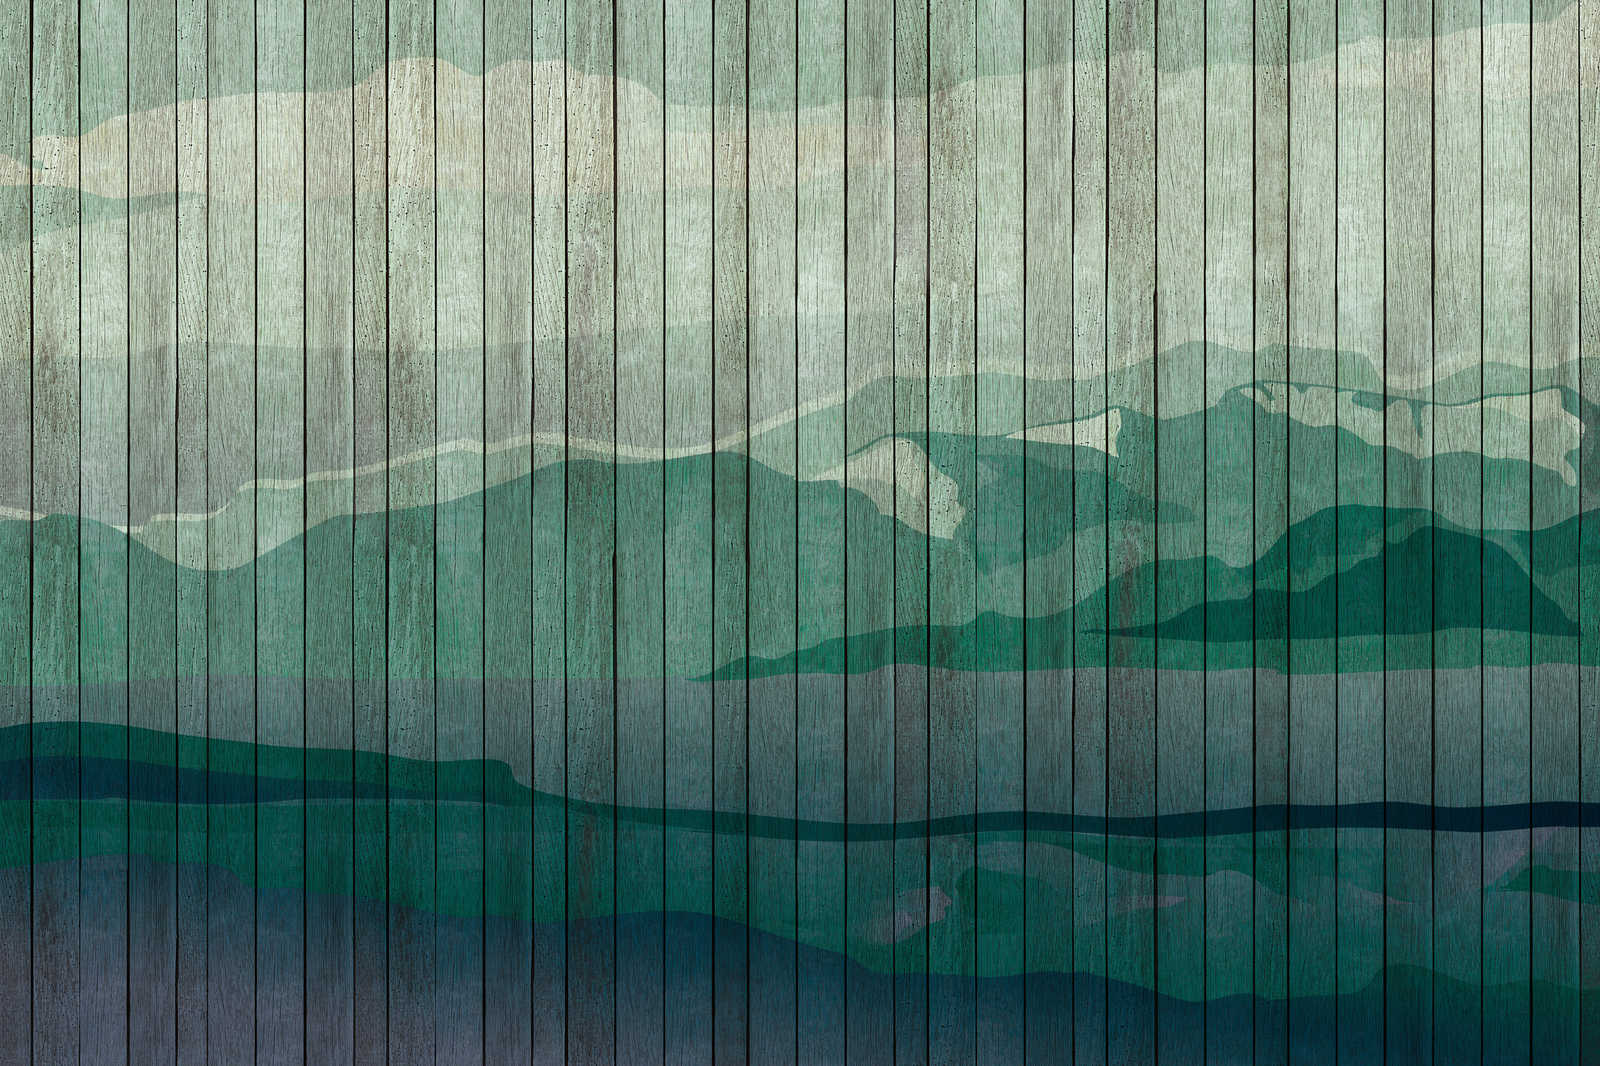             Mountains 3 - modern canvas picture mountain landscape & board optics - 0,90 m x 0,60 m
        